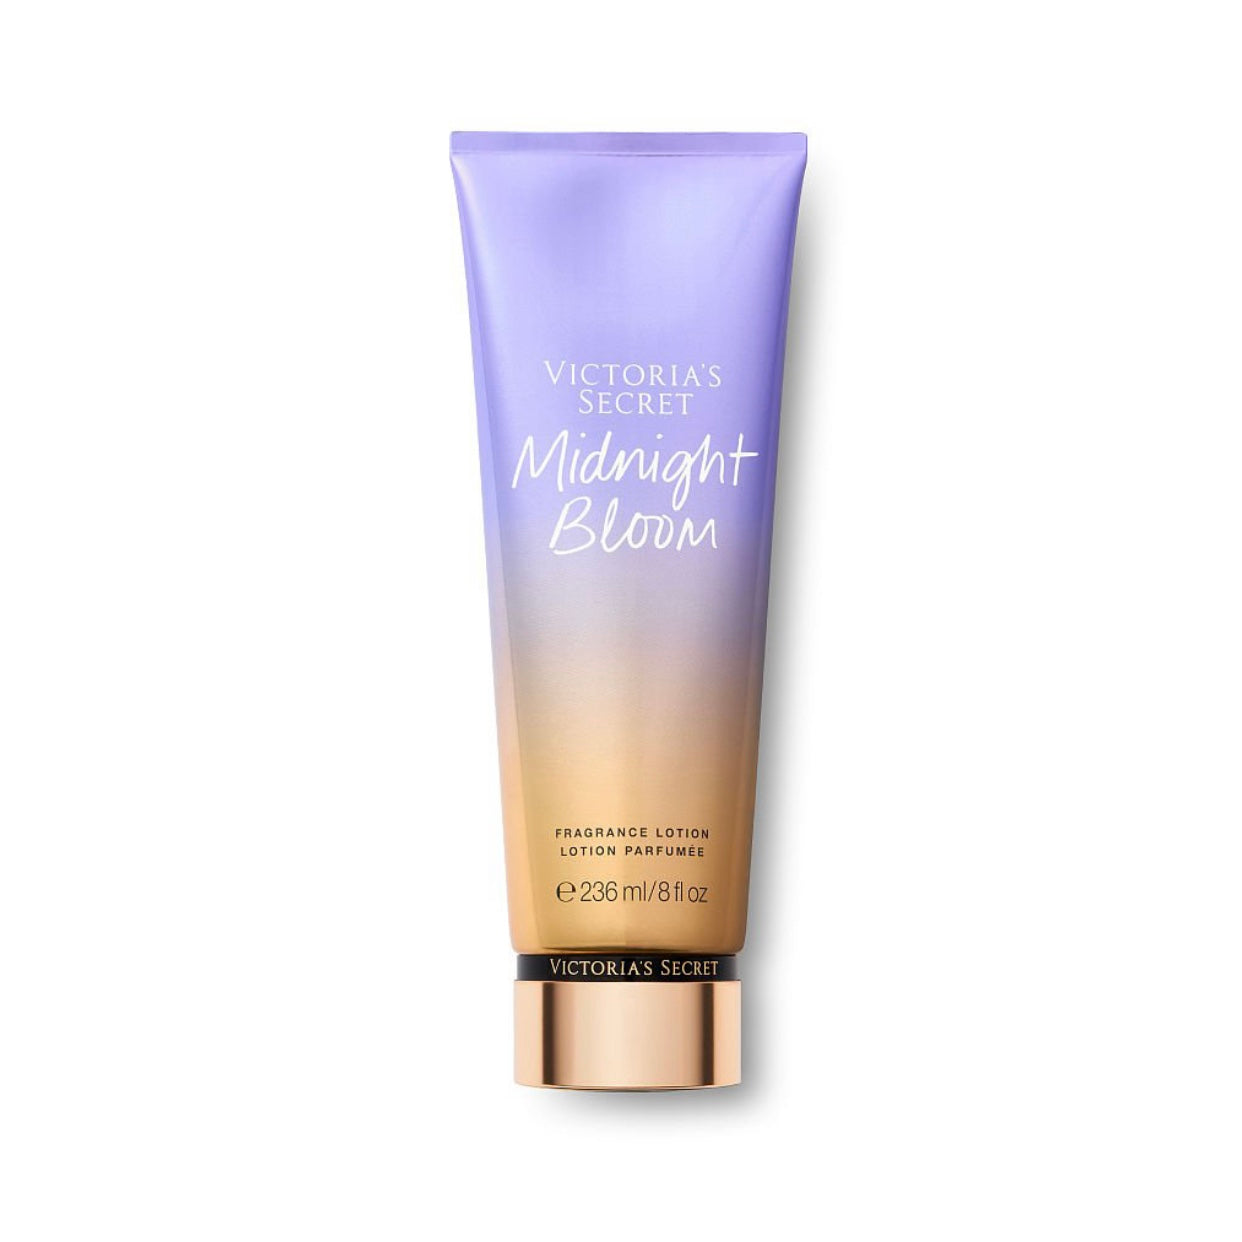 Victoria’s Secret - Hand & Body Fragrance Lotion | Midnight Bloom |236 mL